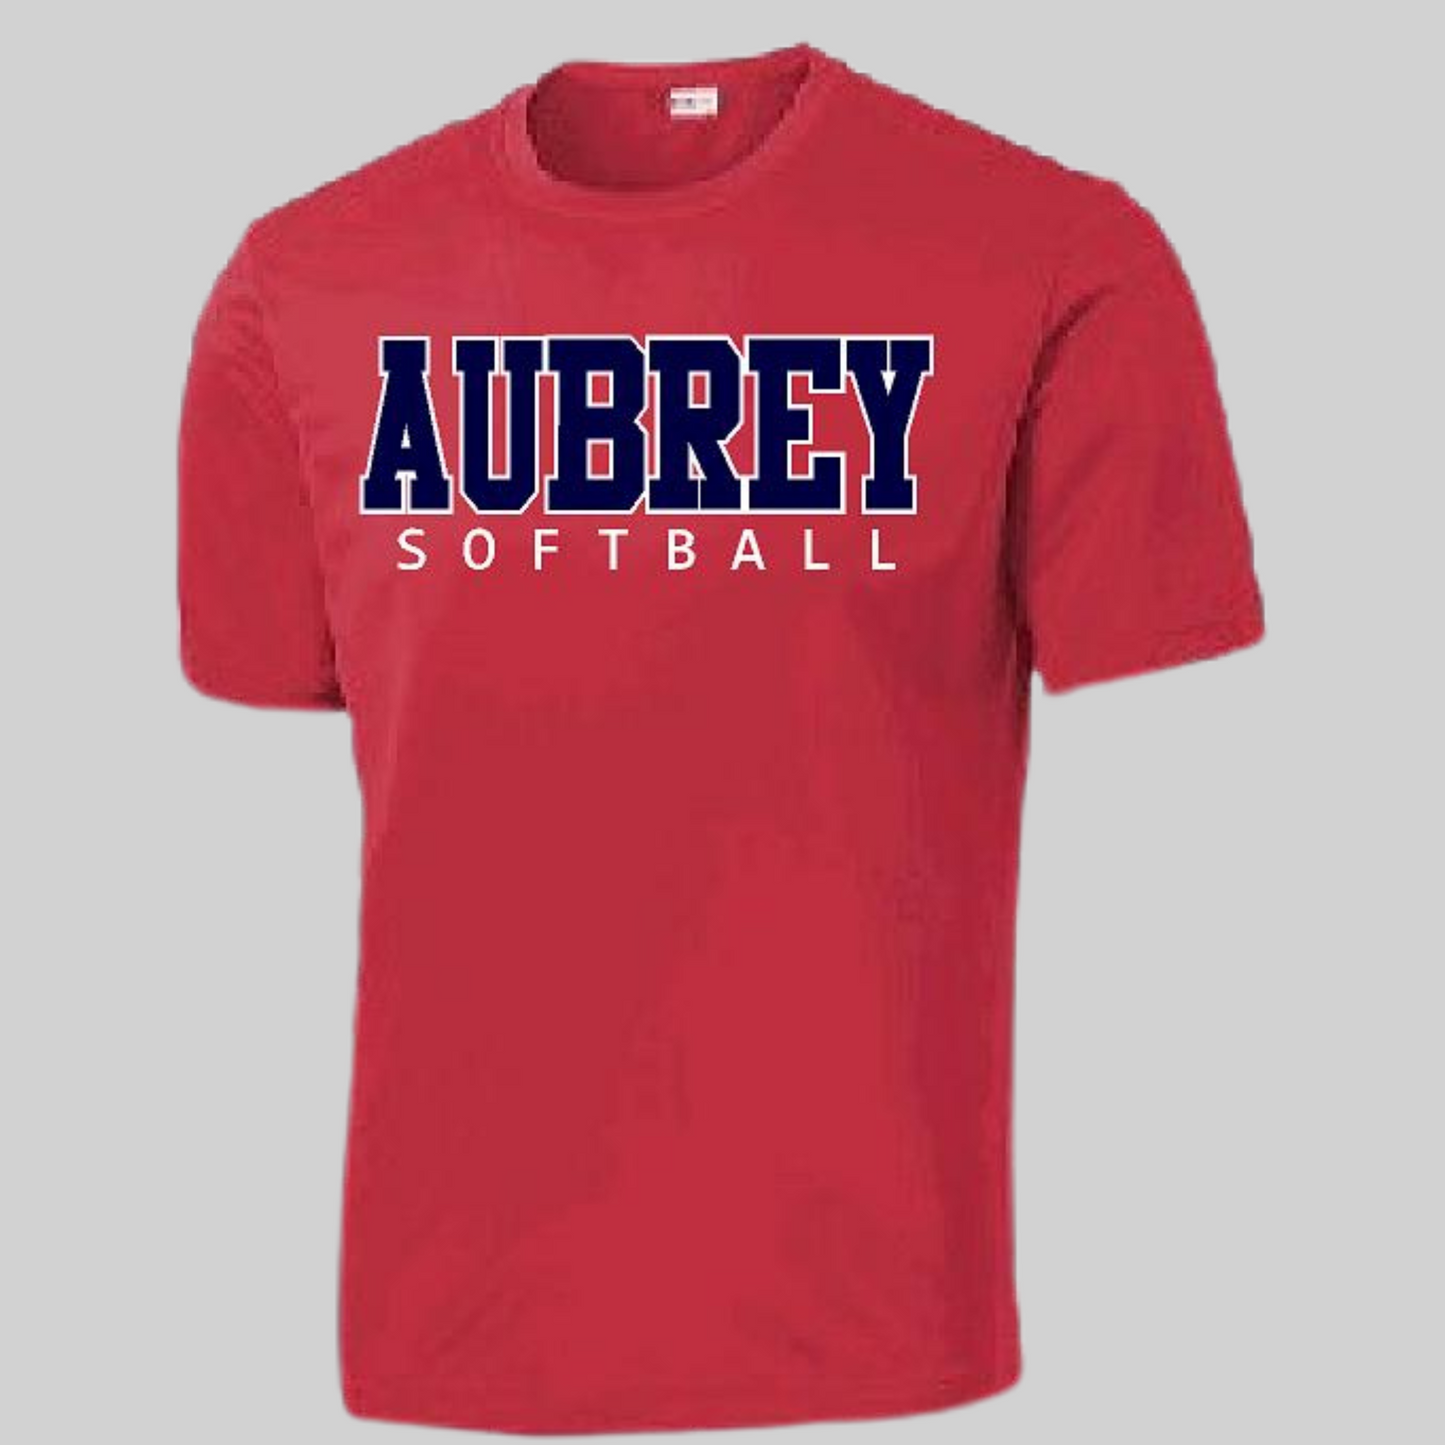 Aubrey High School Softball 23-5